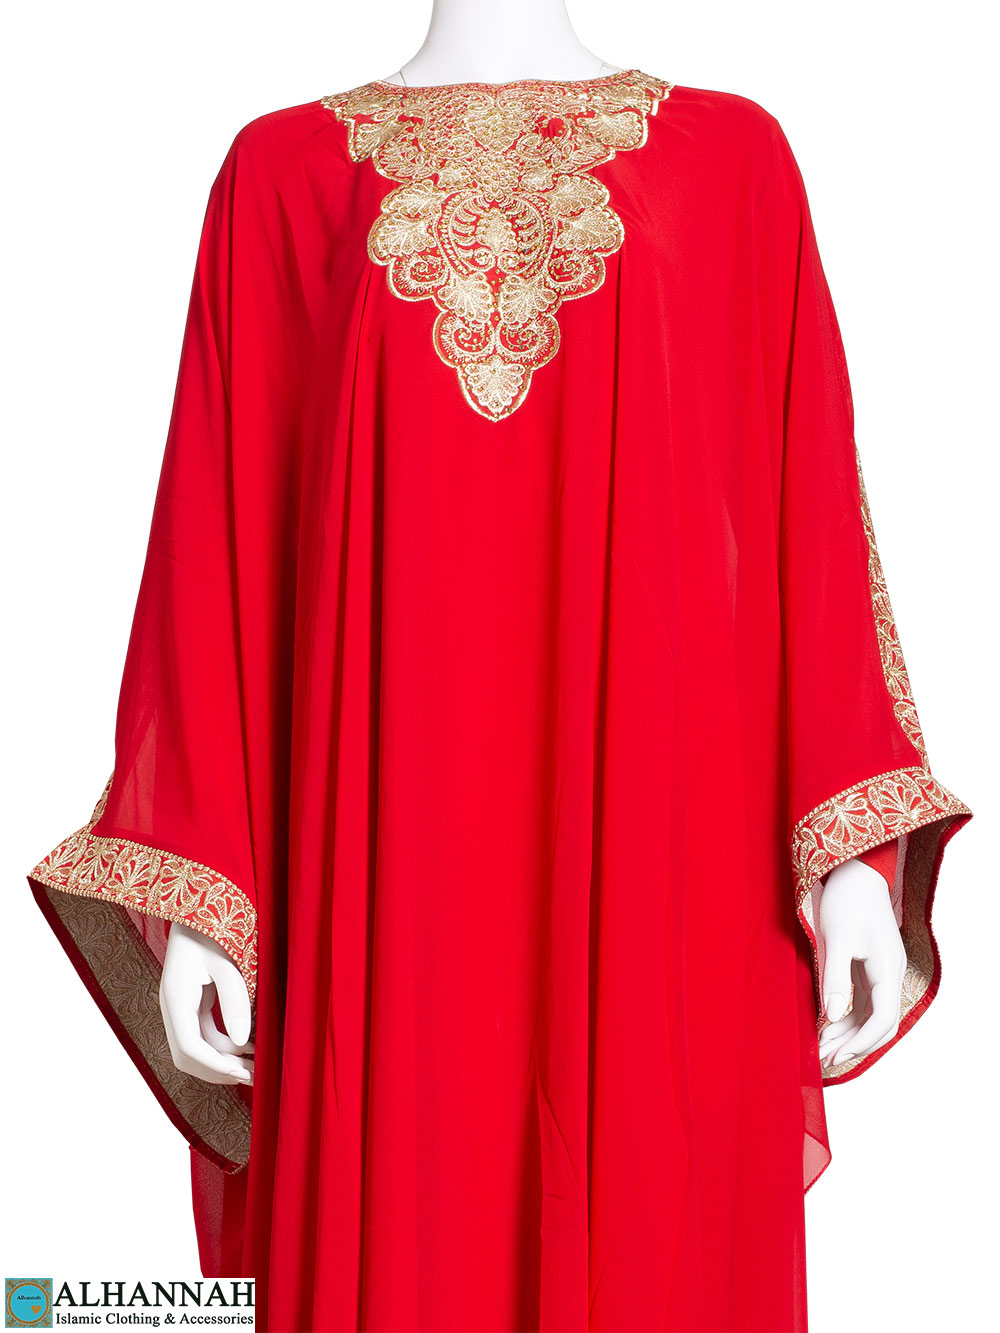 Embroidered Chiffon Overlay Red Abaya | ab788 » Alhannah Islamic Clothing